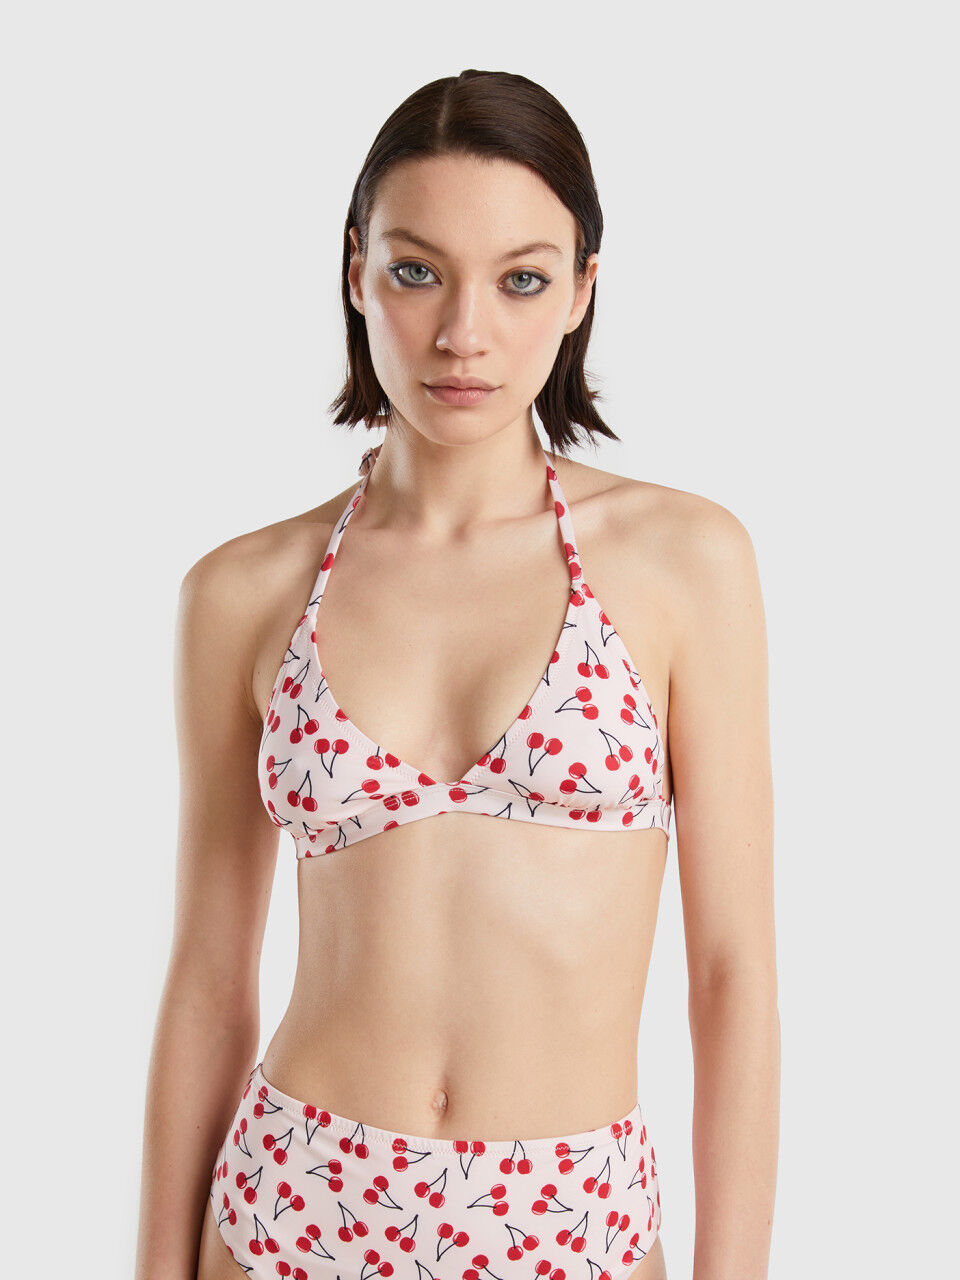 Pink triangle bikini top with cherry pattern